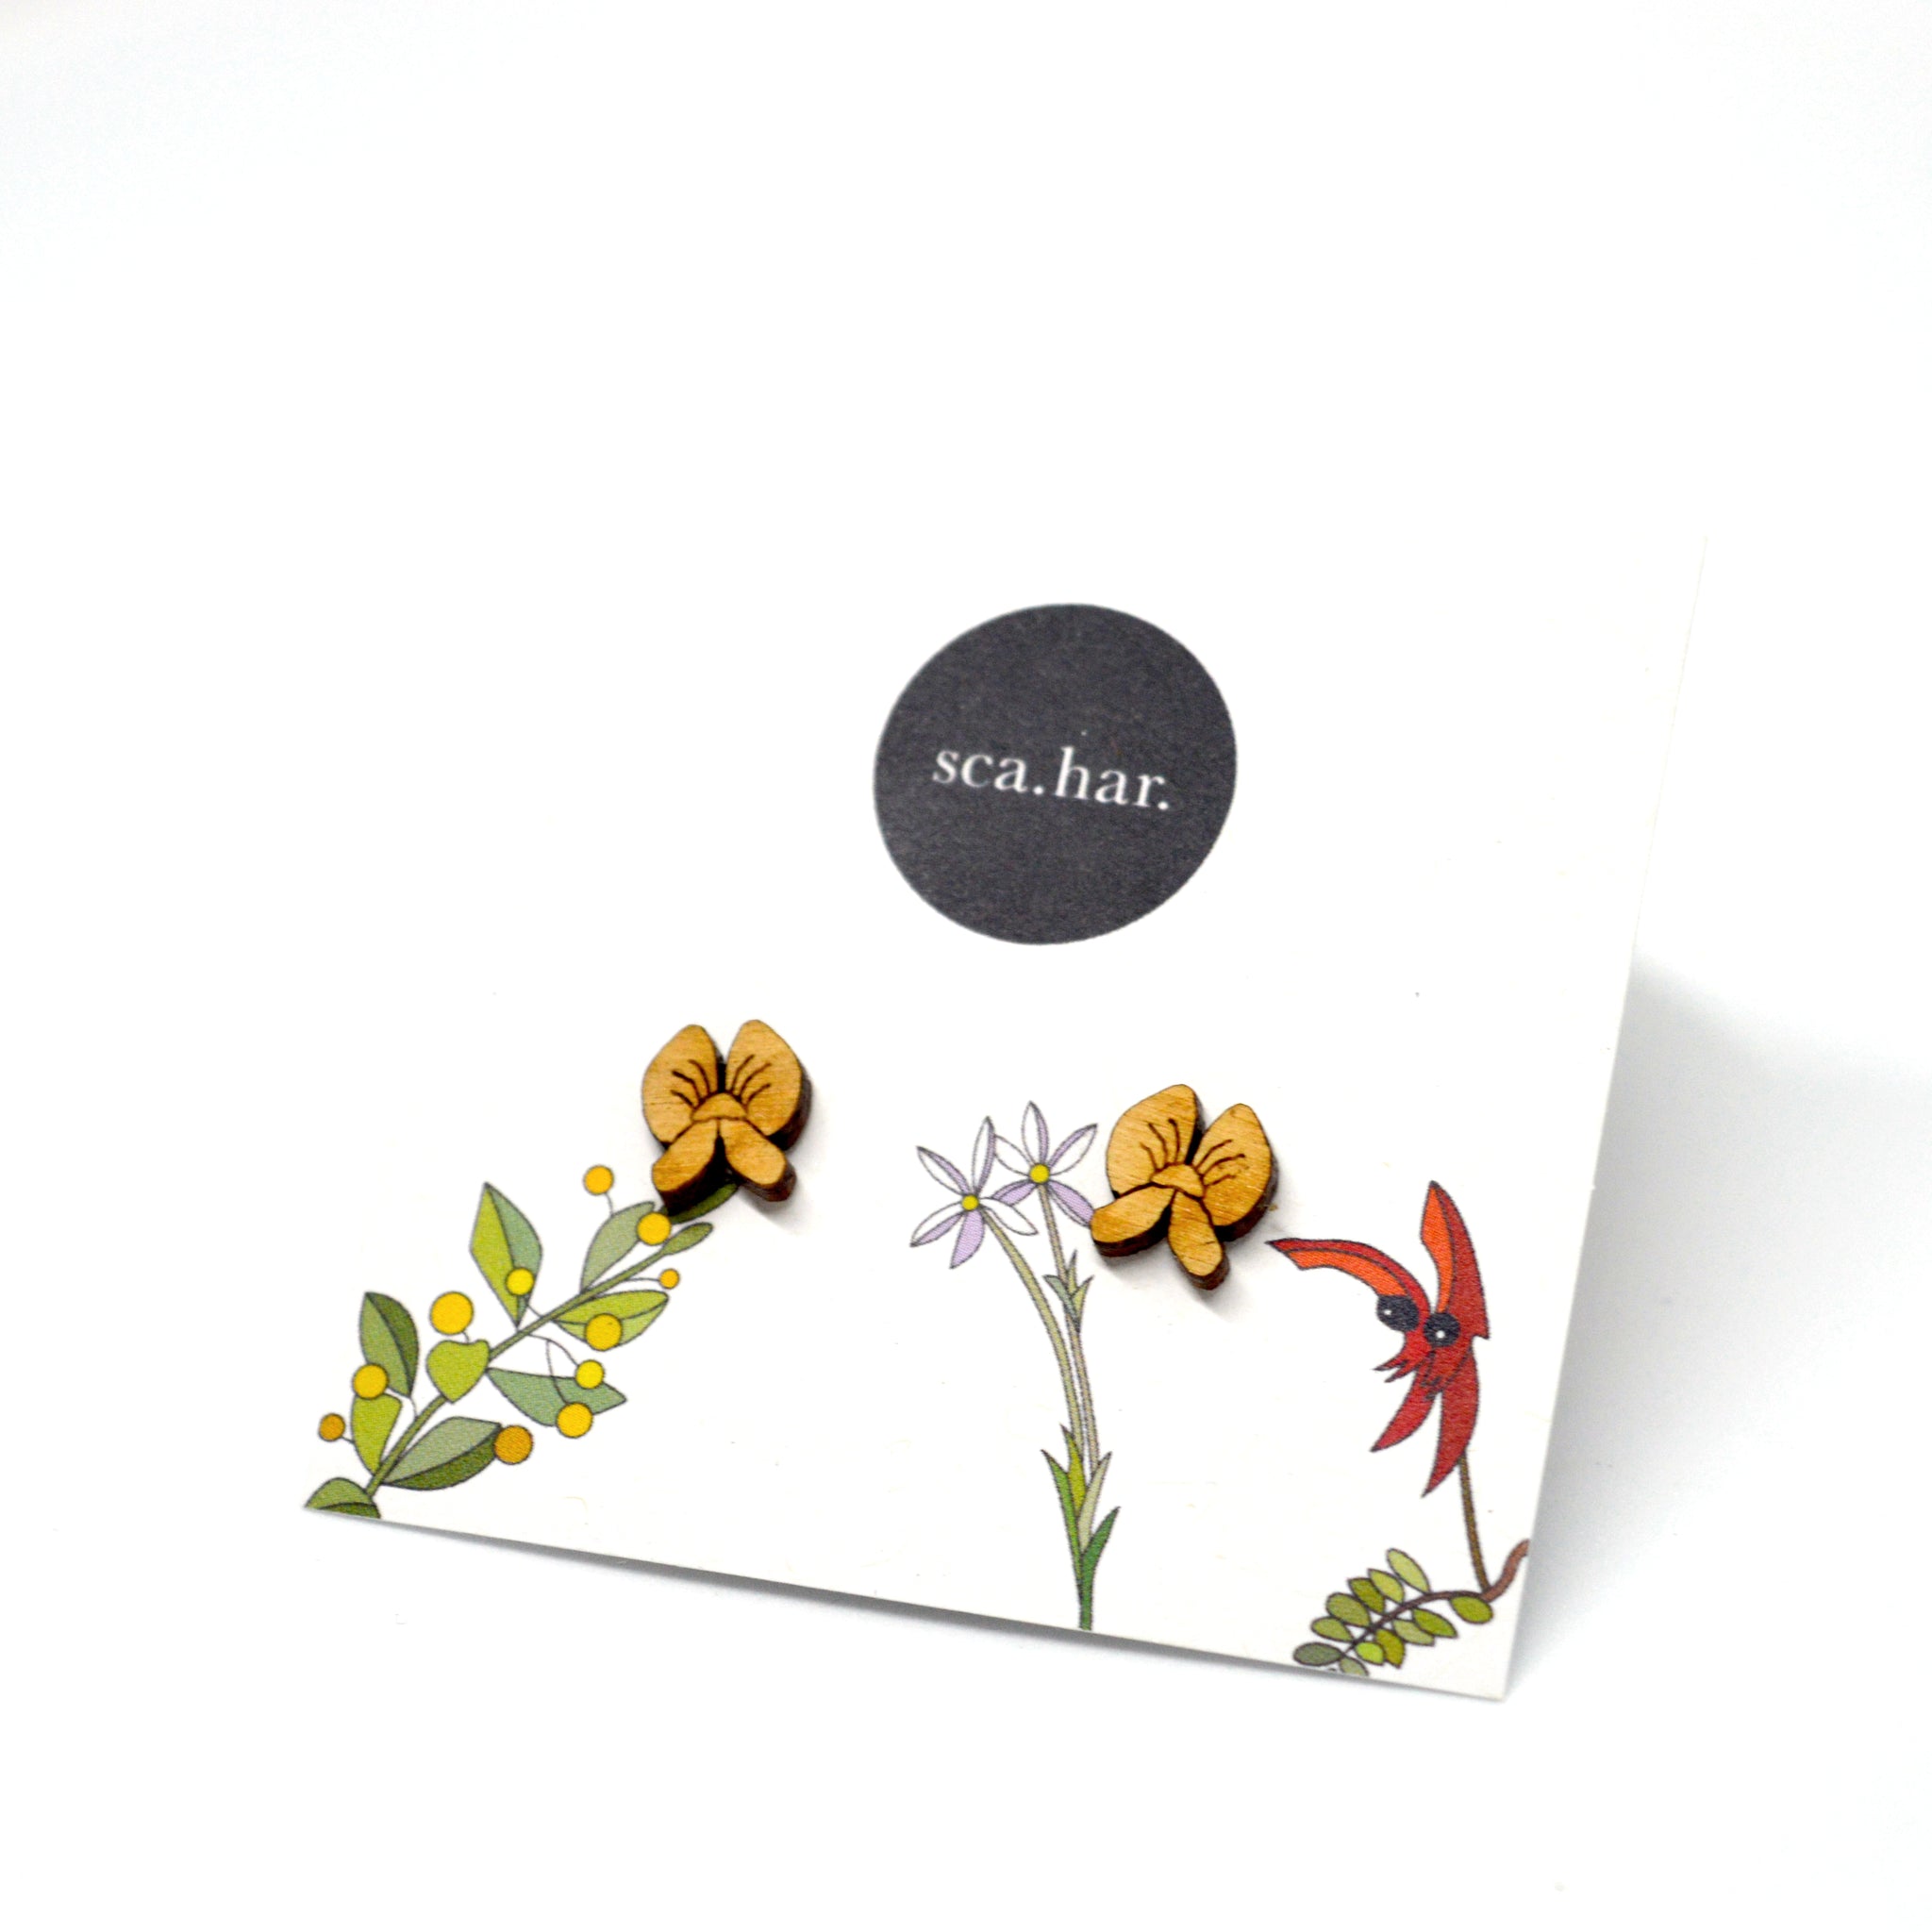 sca.har. - Tiny Flower Studs (hpe004)